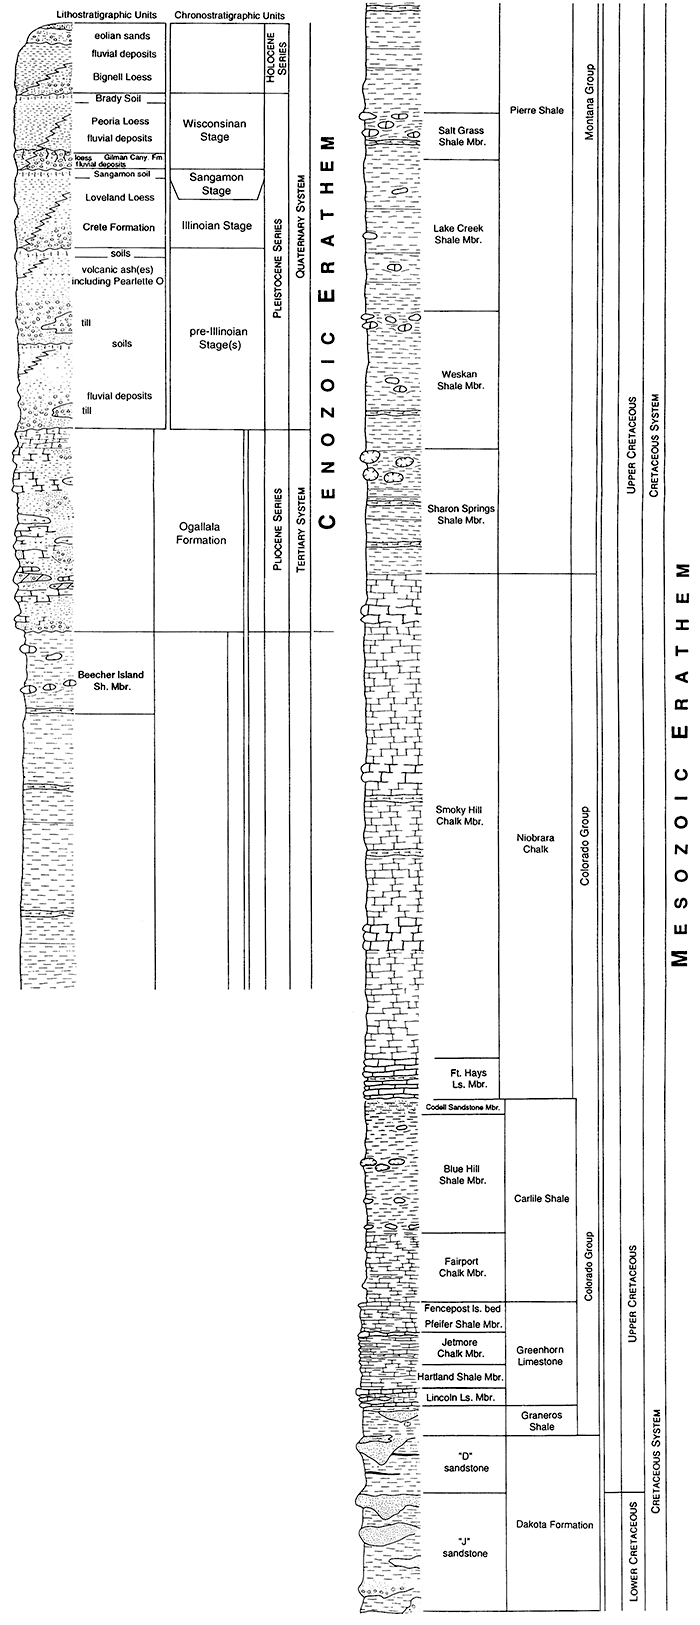 Stratigraphic chart for Russell County, from base Dakota Fm, Graneros Sh, Greenhorn Ls, Carlile Sh, Niobrara Chalk, Pierre Sh, Ogallala Fm, and Pleistocene and Holocene deposits, soils, loesses, and sands.